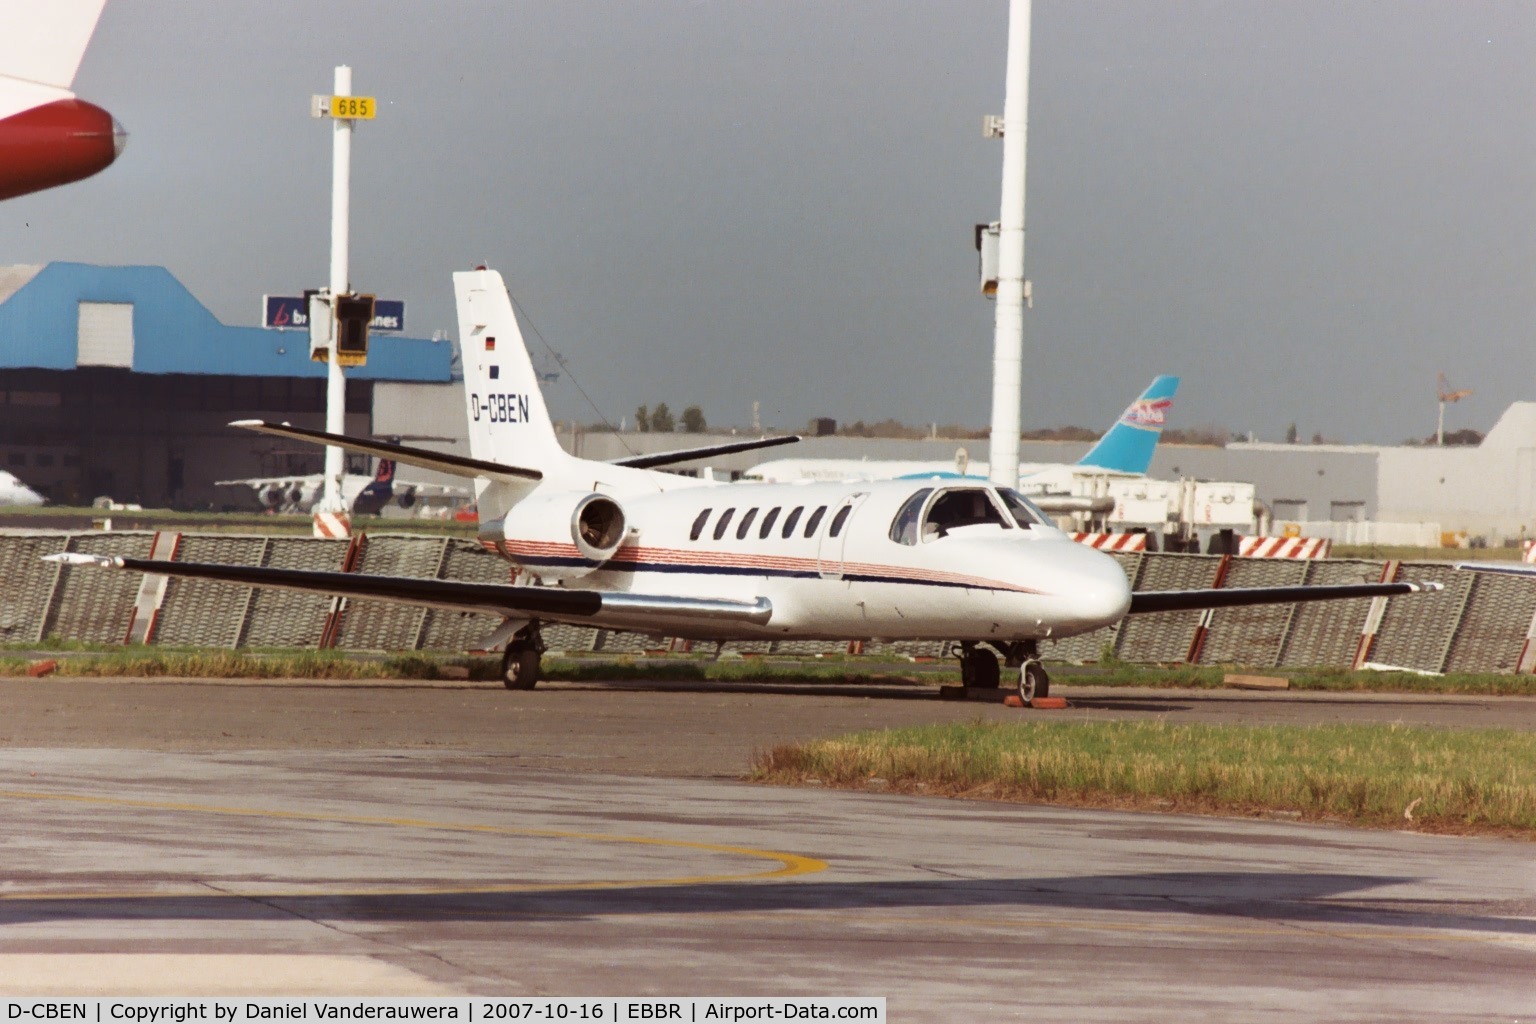 D-CBEN, 1994 Cessna 560 Citation Ultra C/N 560-0282, parked on General Aviation apron (Abelag)